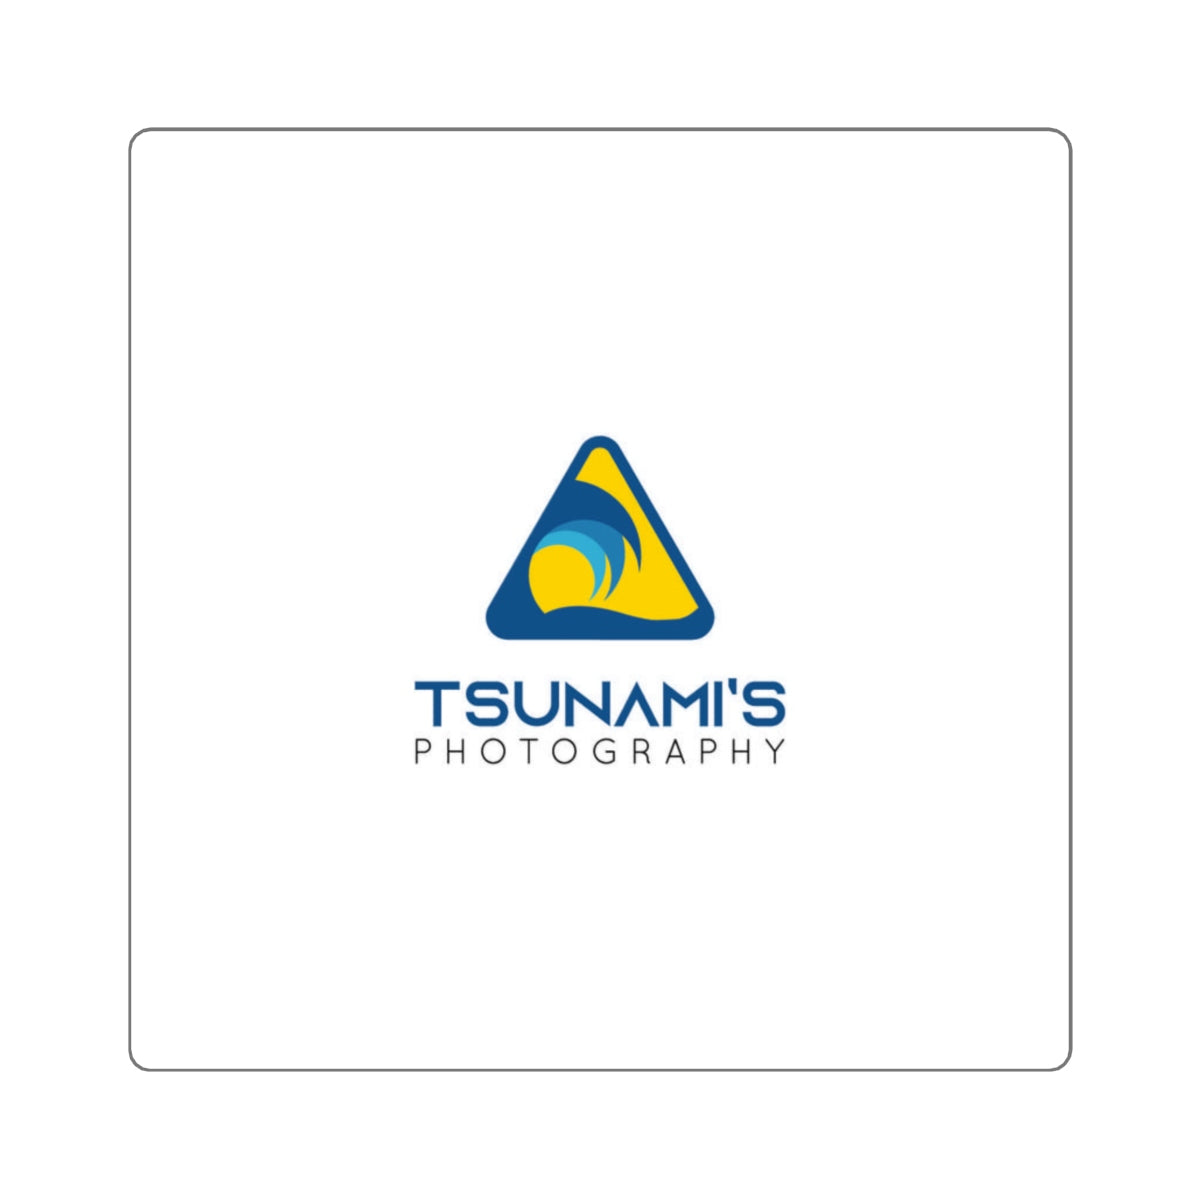 Tsunami's Photography -Sticker - Tsunami's Shop 